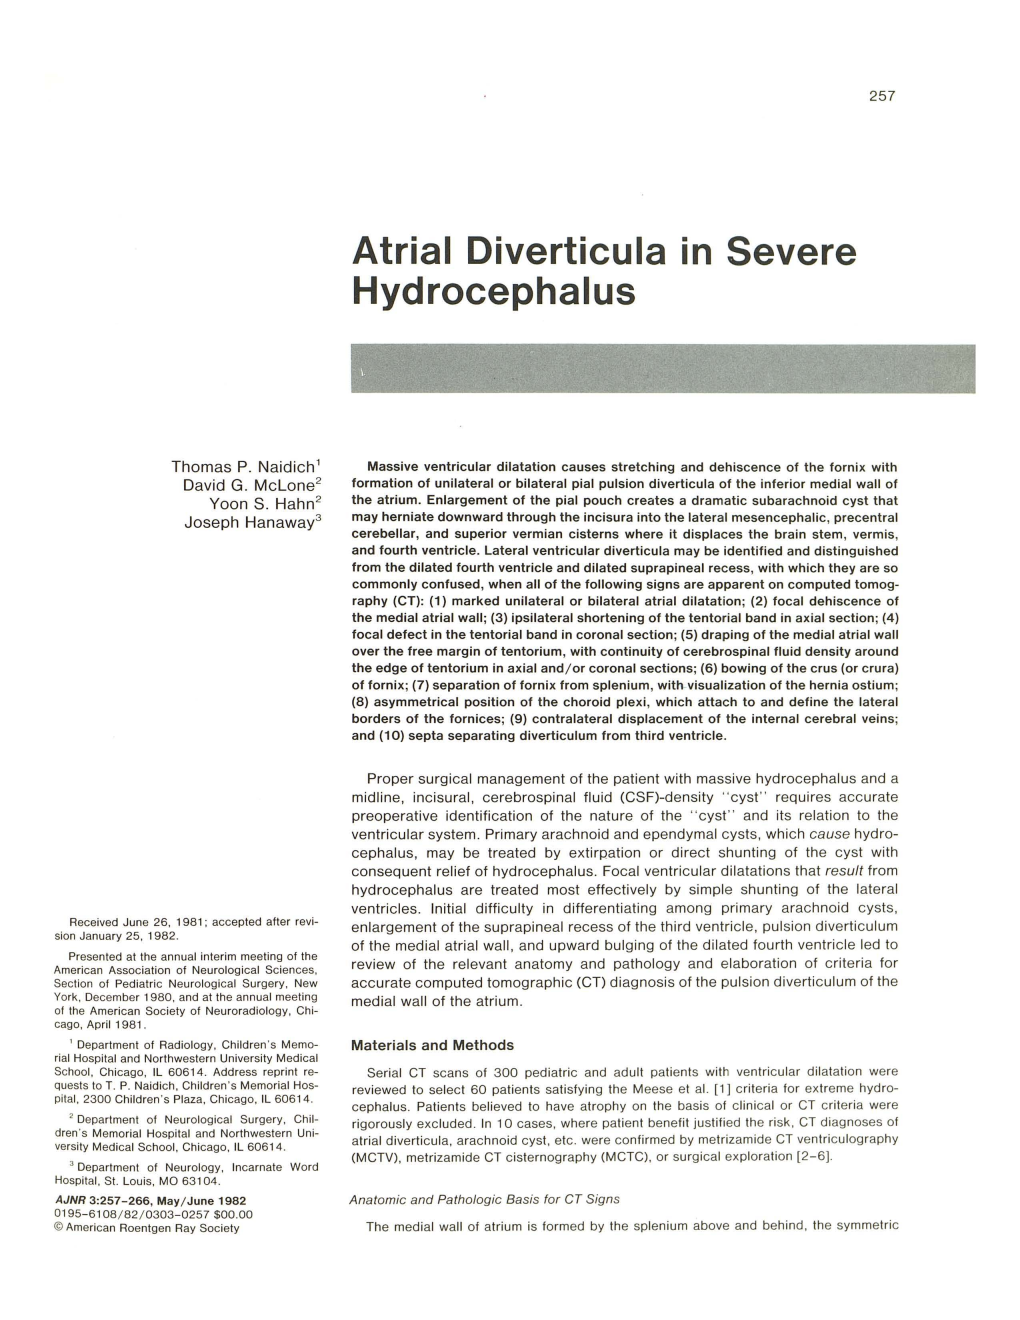 Atrial Diverticula in Severe Hydrocephalus